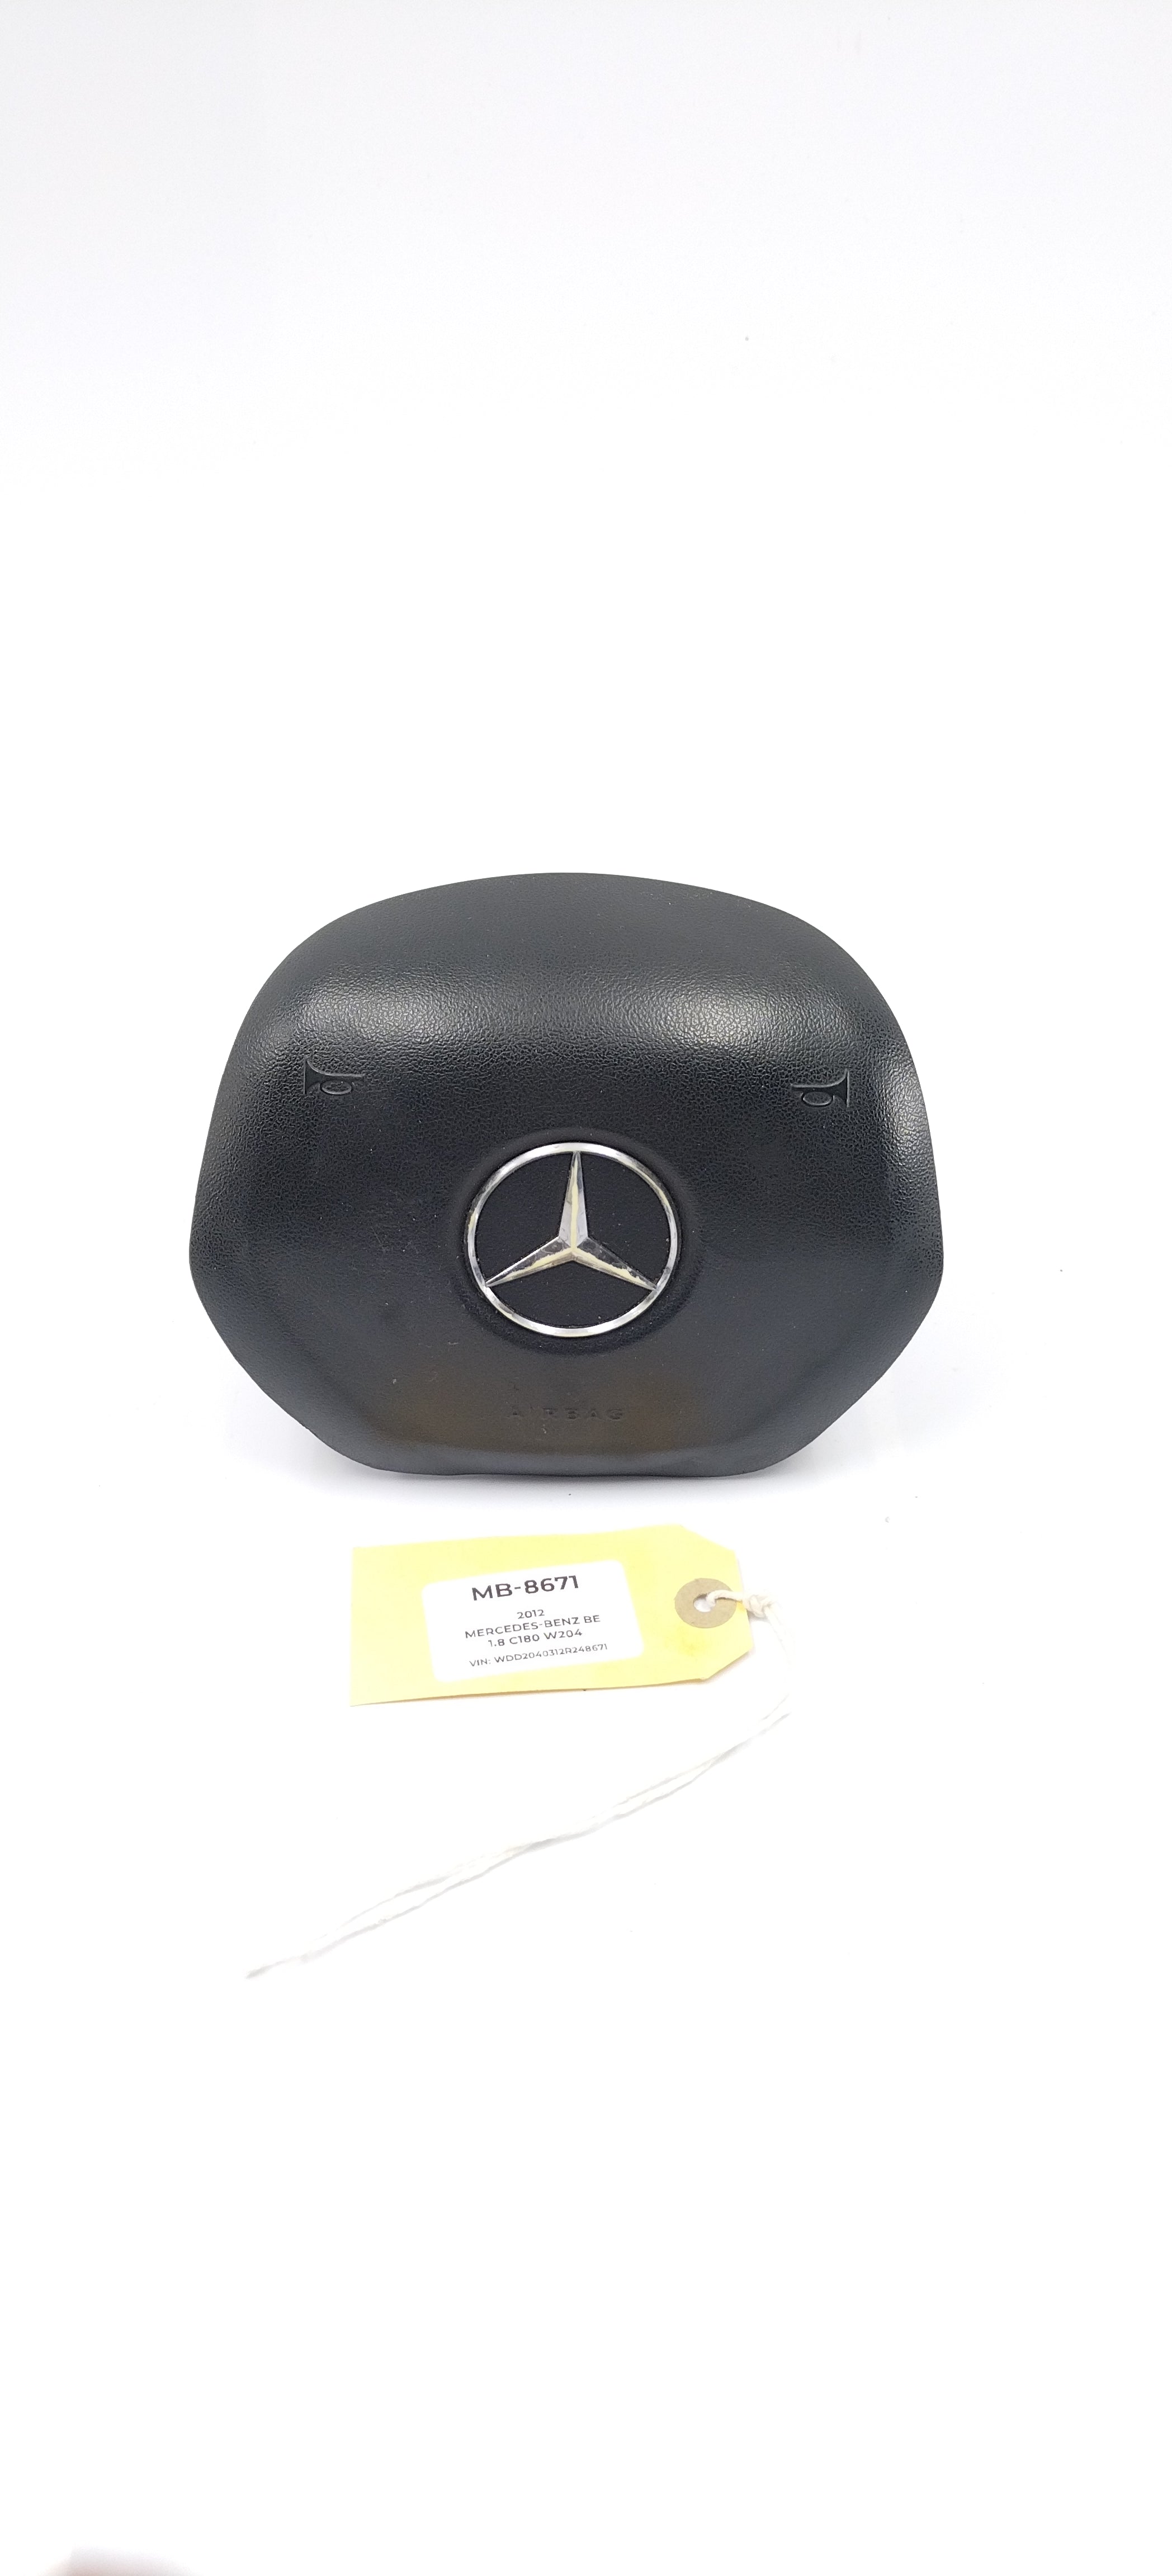 2012 Mercedes-Benz C180 Drivers Airbag